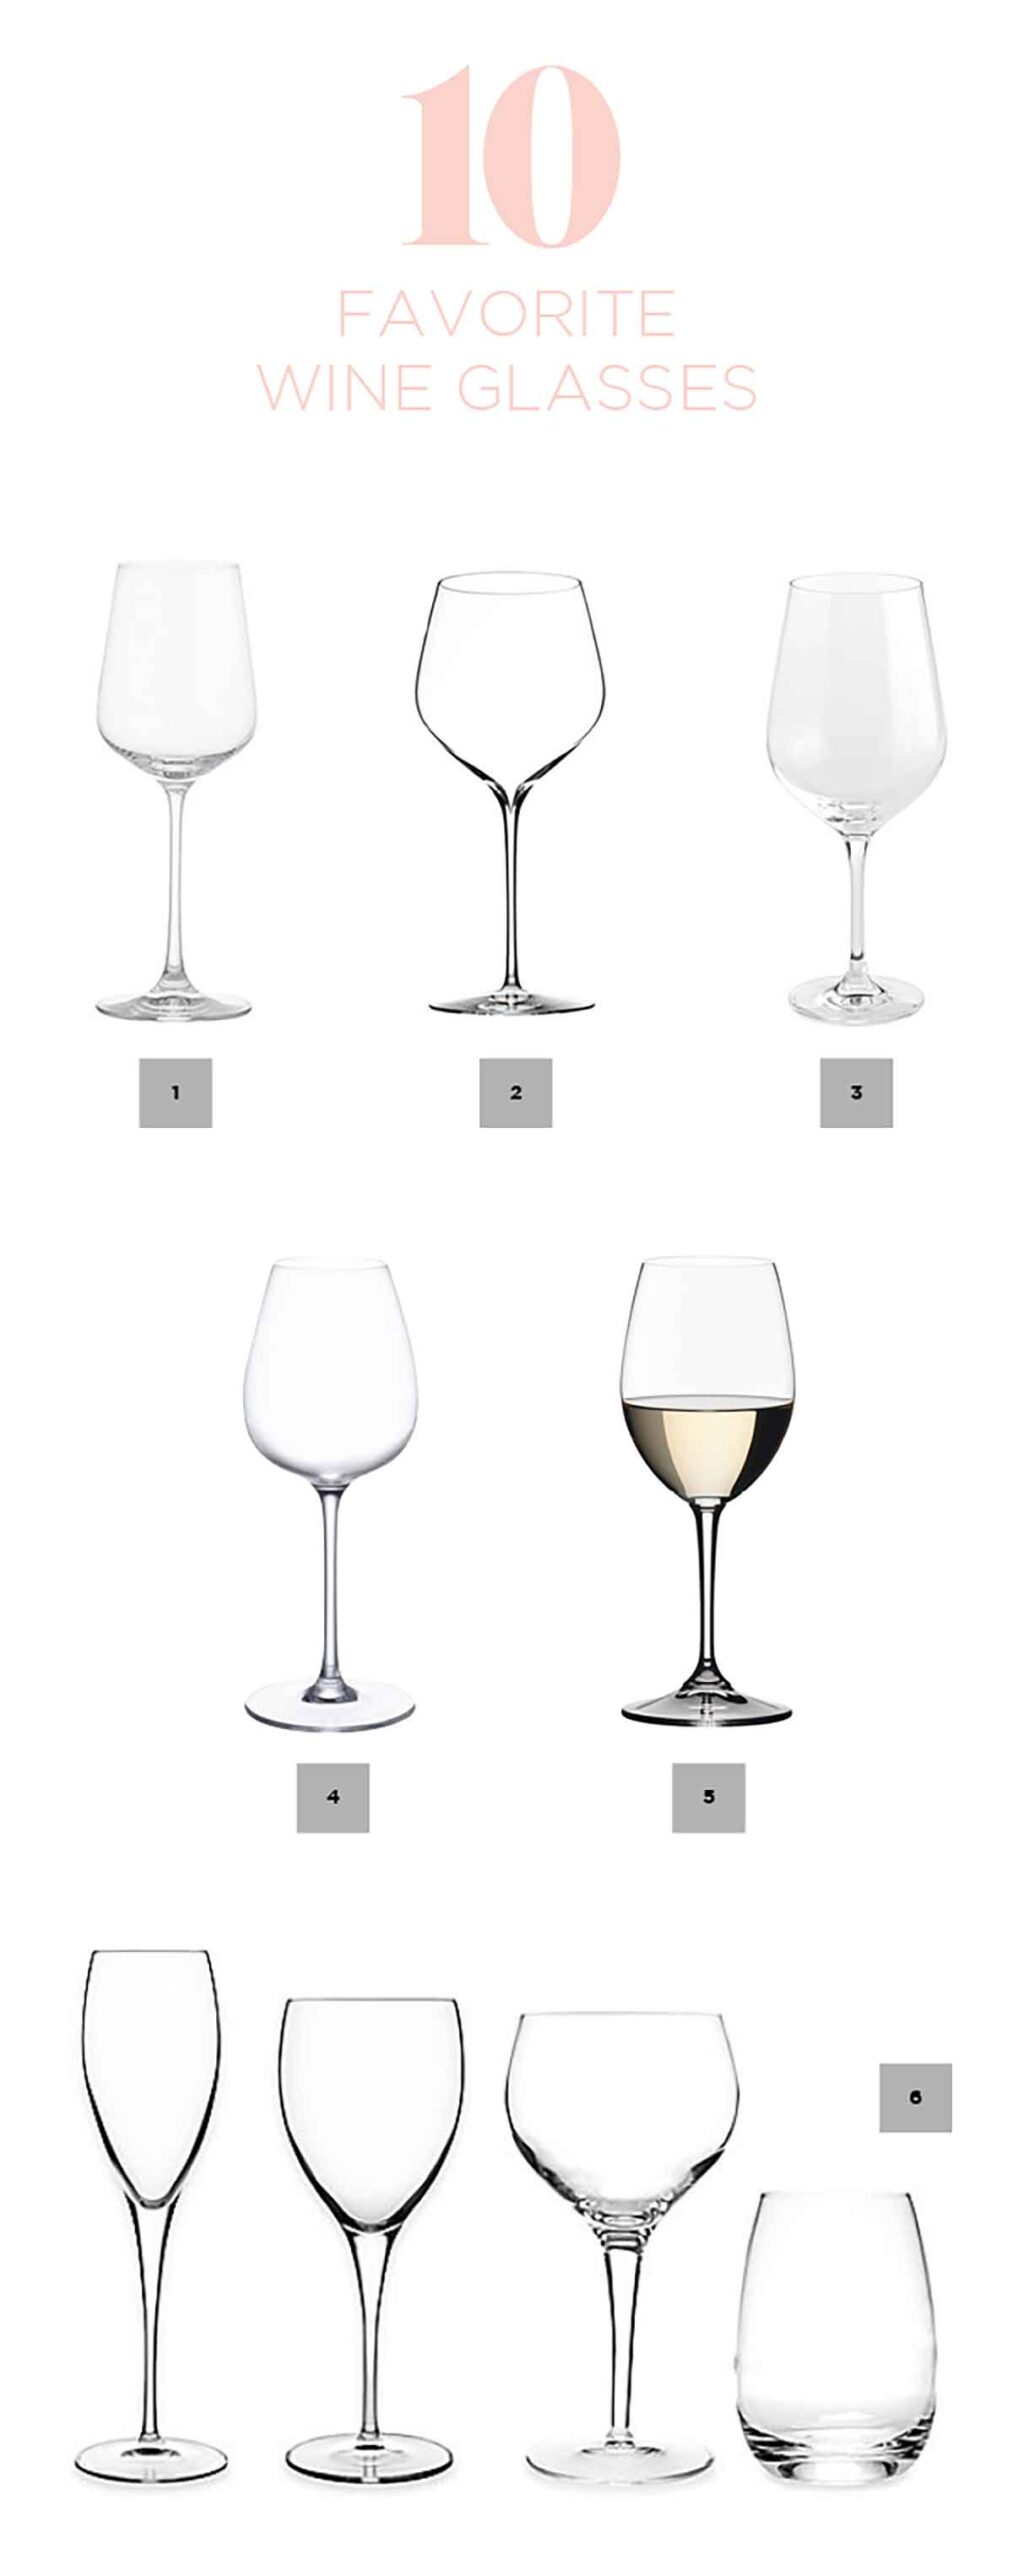 Favorite wine glasses